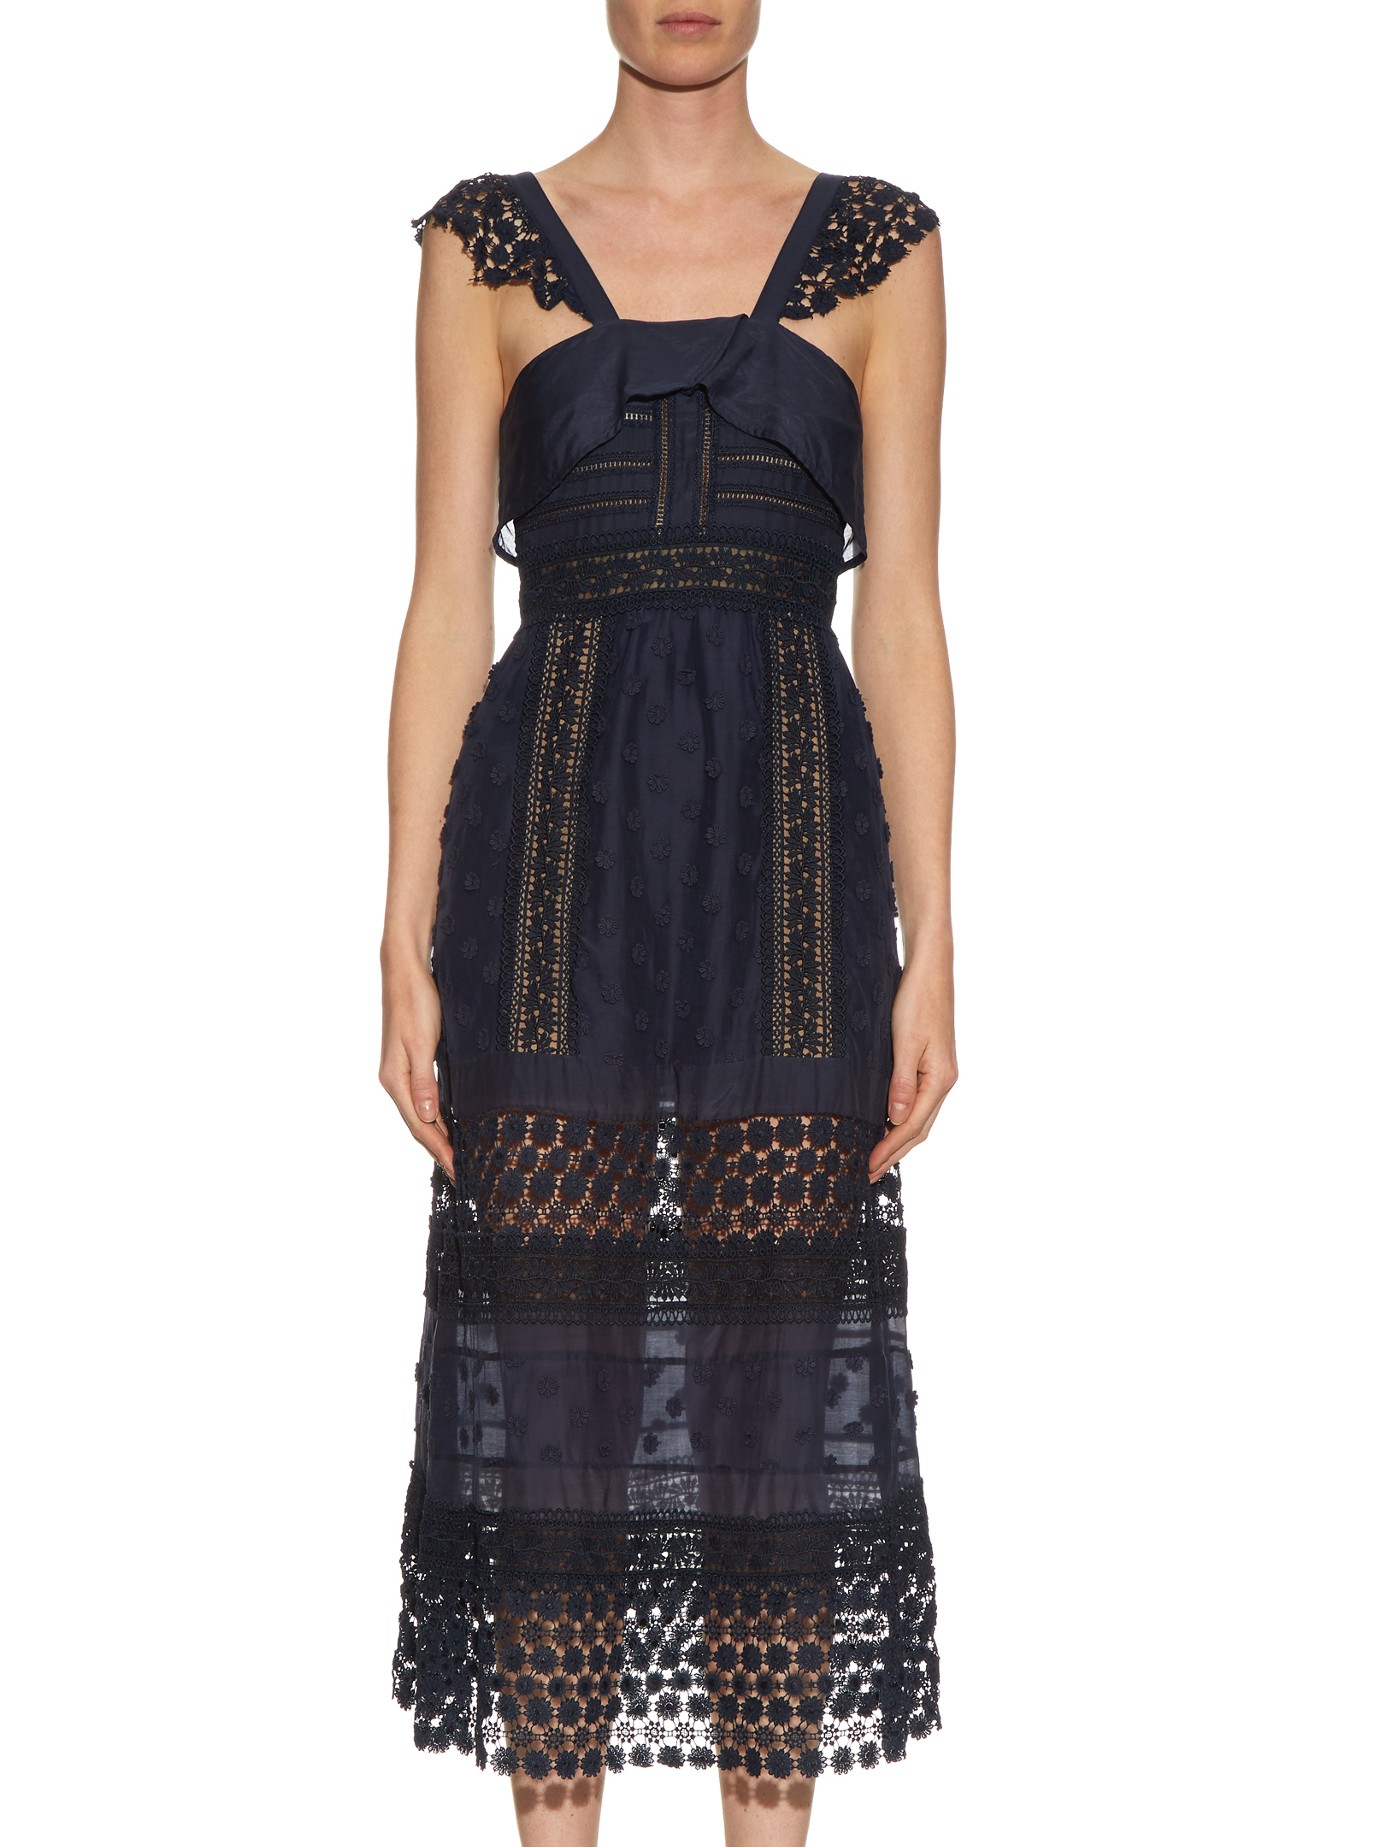 Self-Portrait - Bluebell Lace Midi Dress | FASHION STYLE FAN